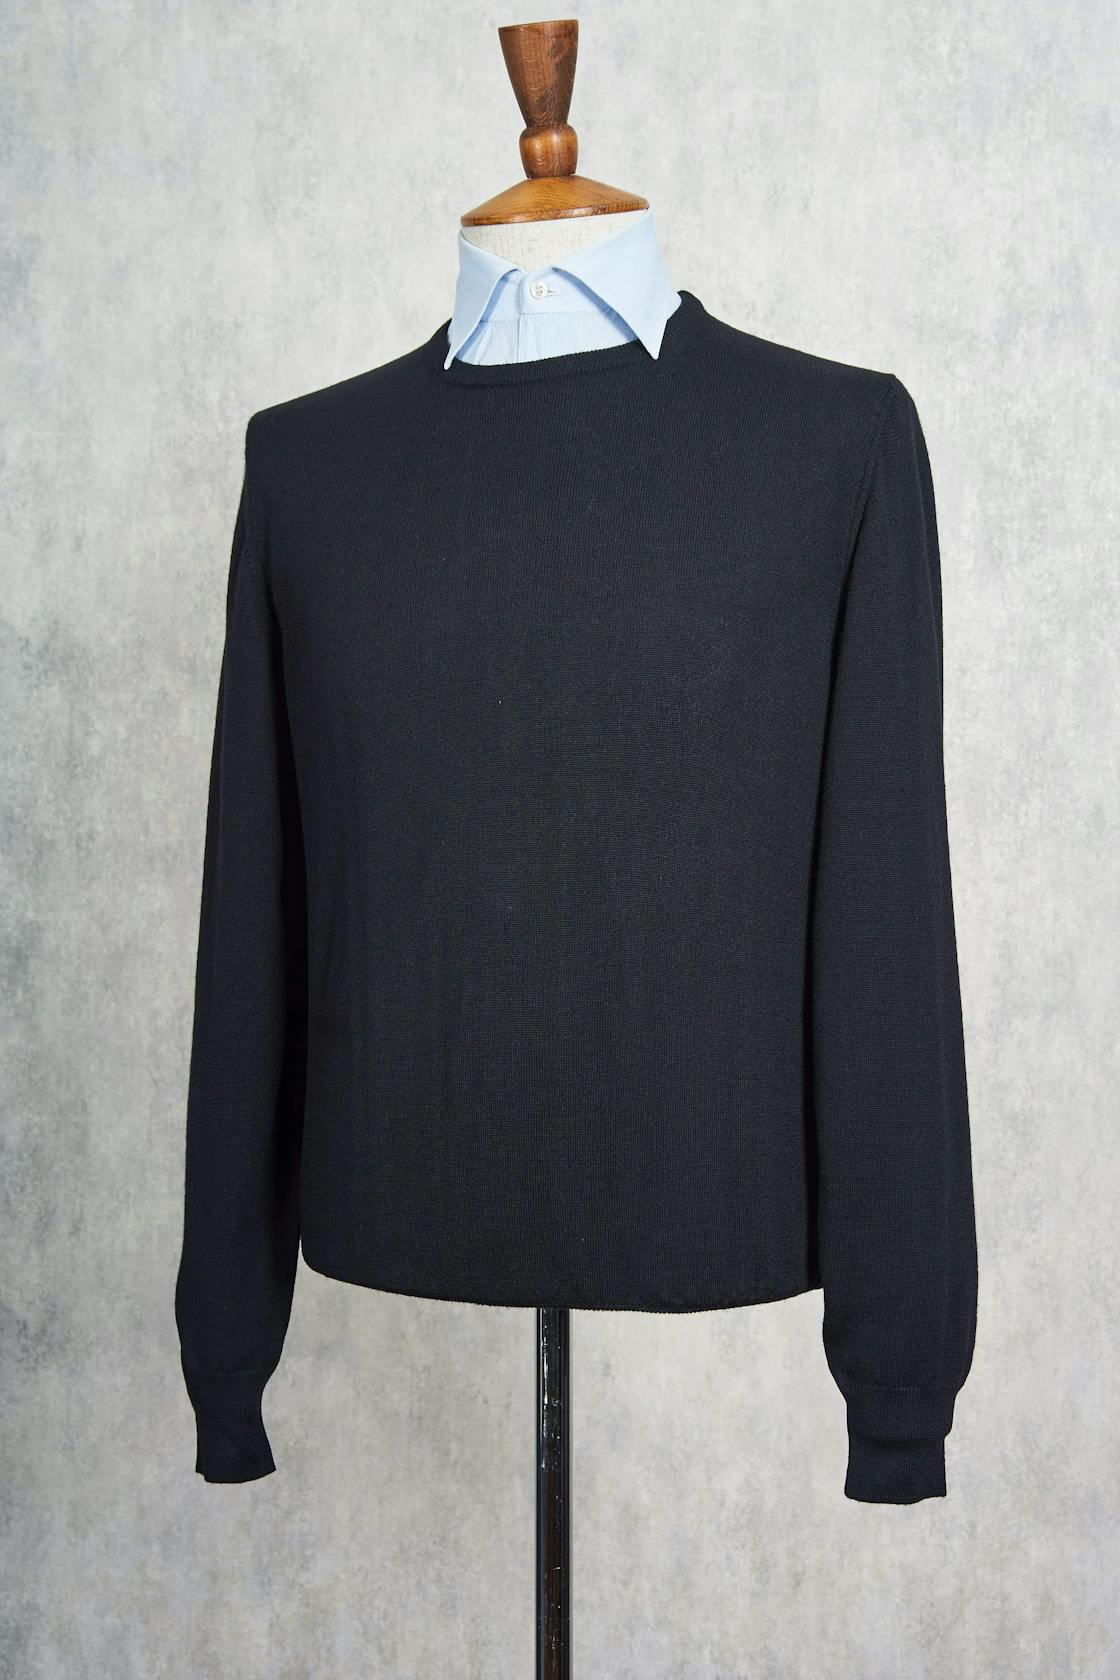 Ascot Chang Black Extra-Fine Merino Wool Round Neck Sweater